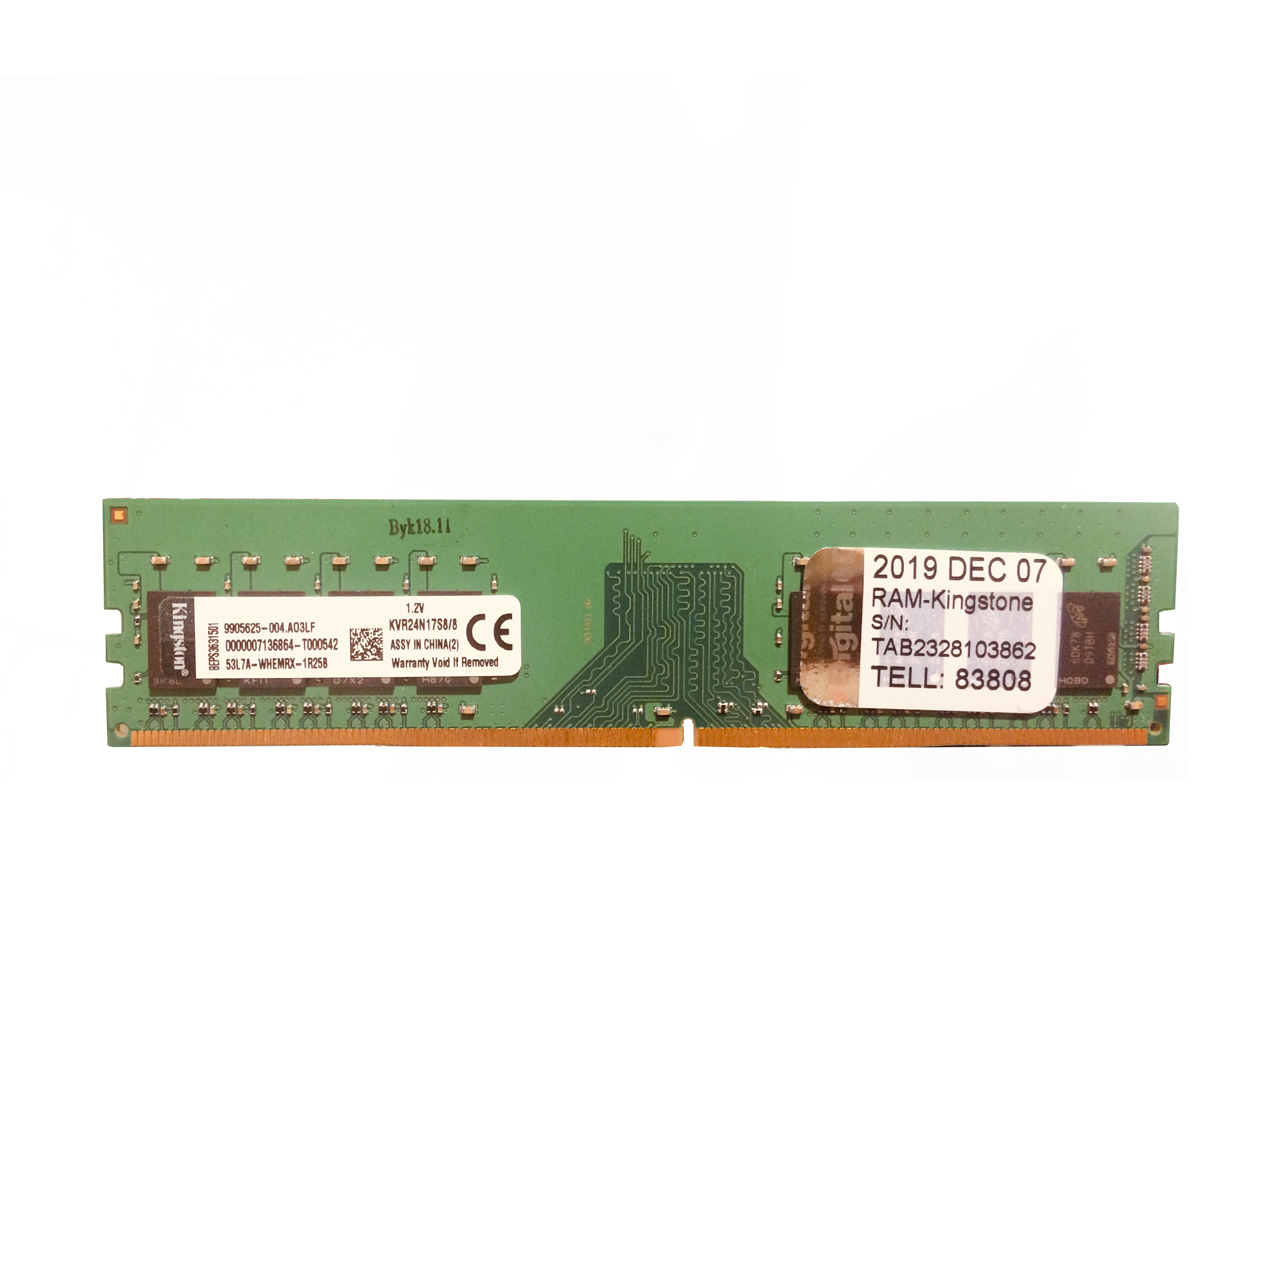 رم دسکتاپ DDR4 دو کاناله 2400 مگاهرتز CL15 کینگستون ظرفیت 8 گیگابایت KVR24N17S8/8